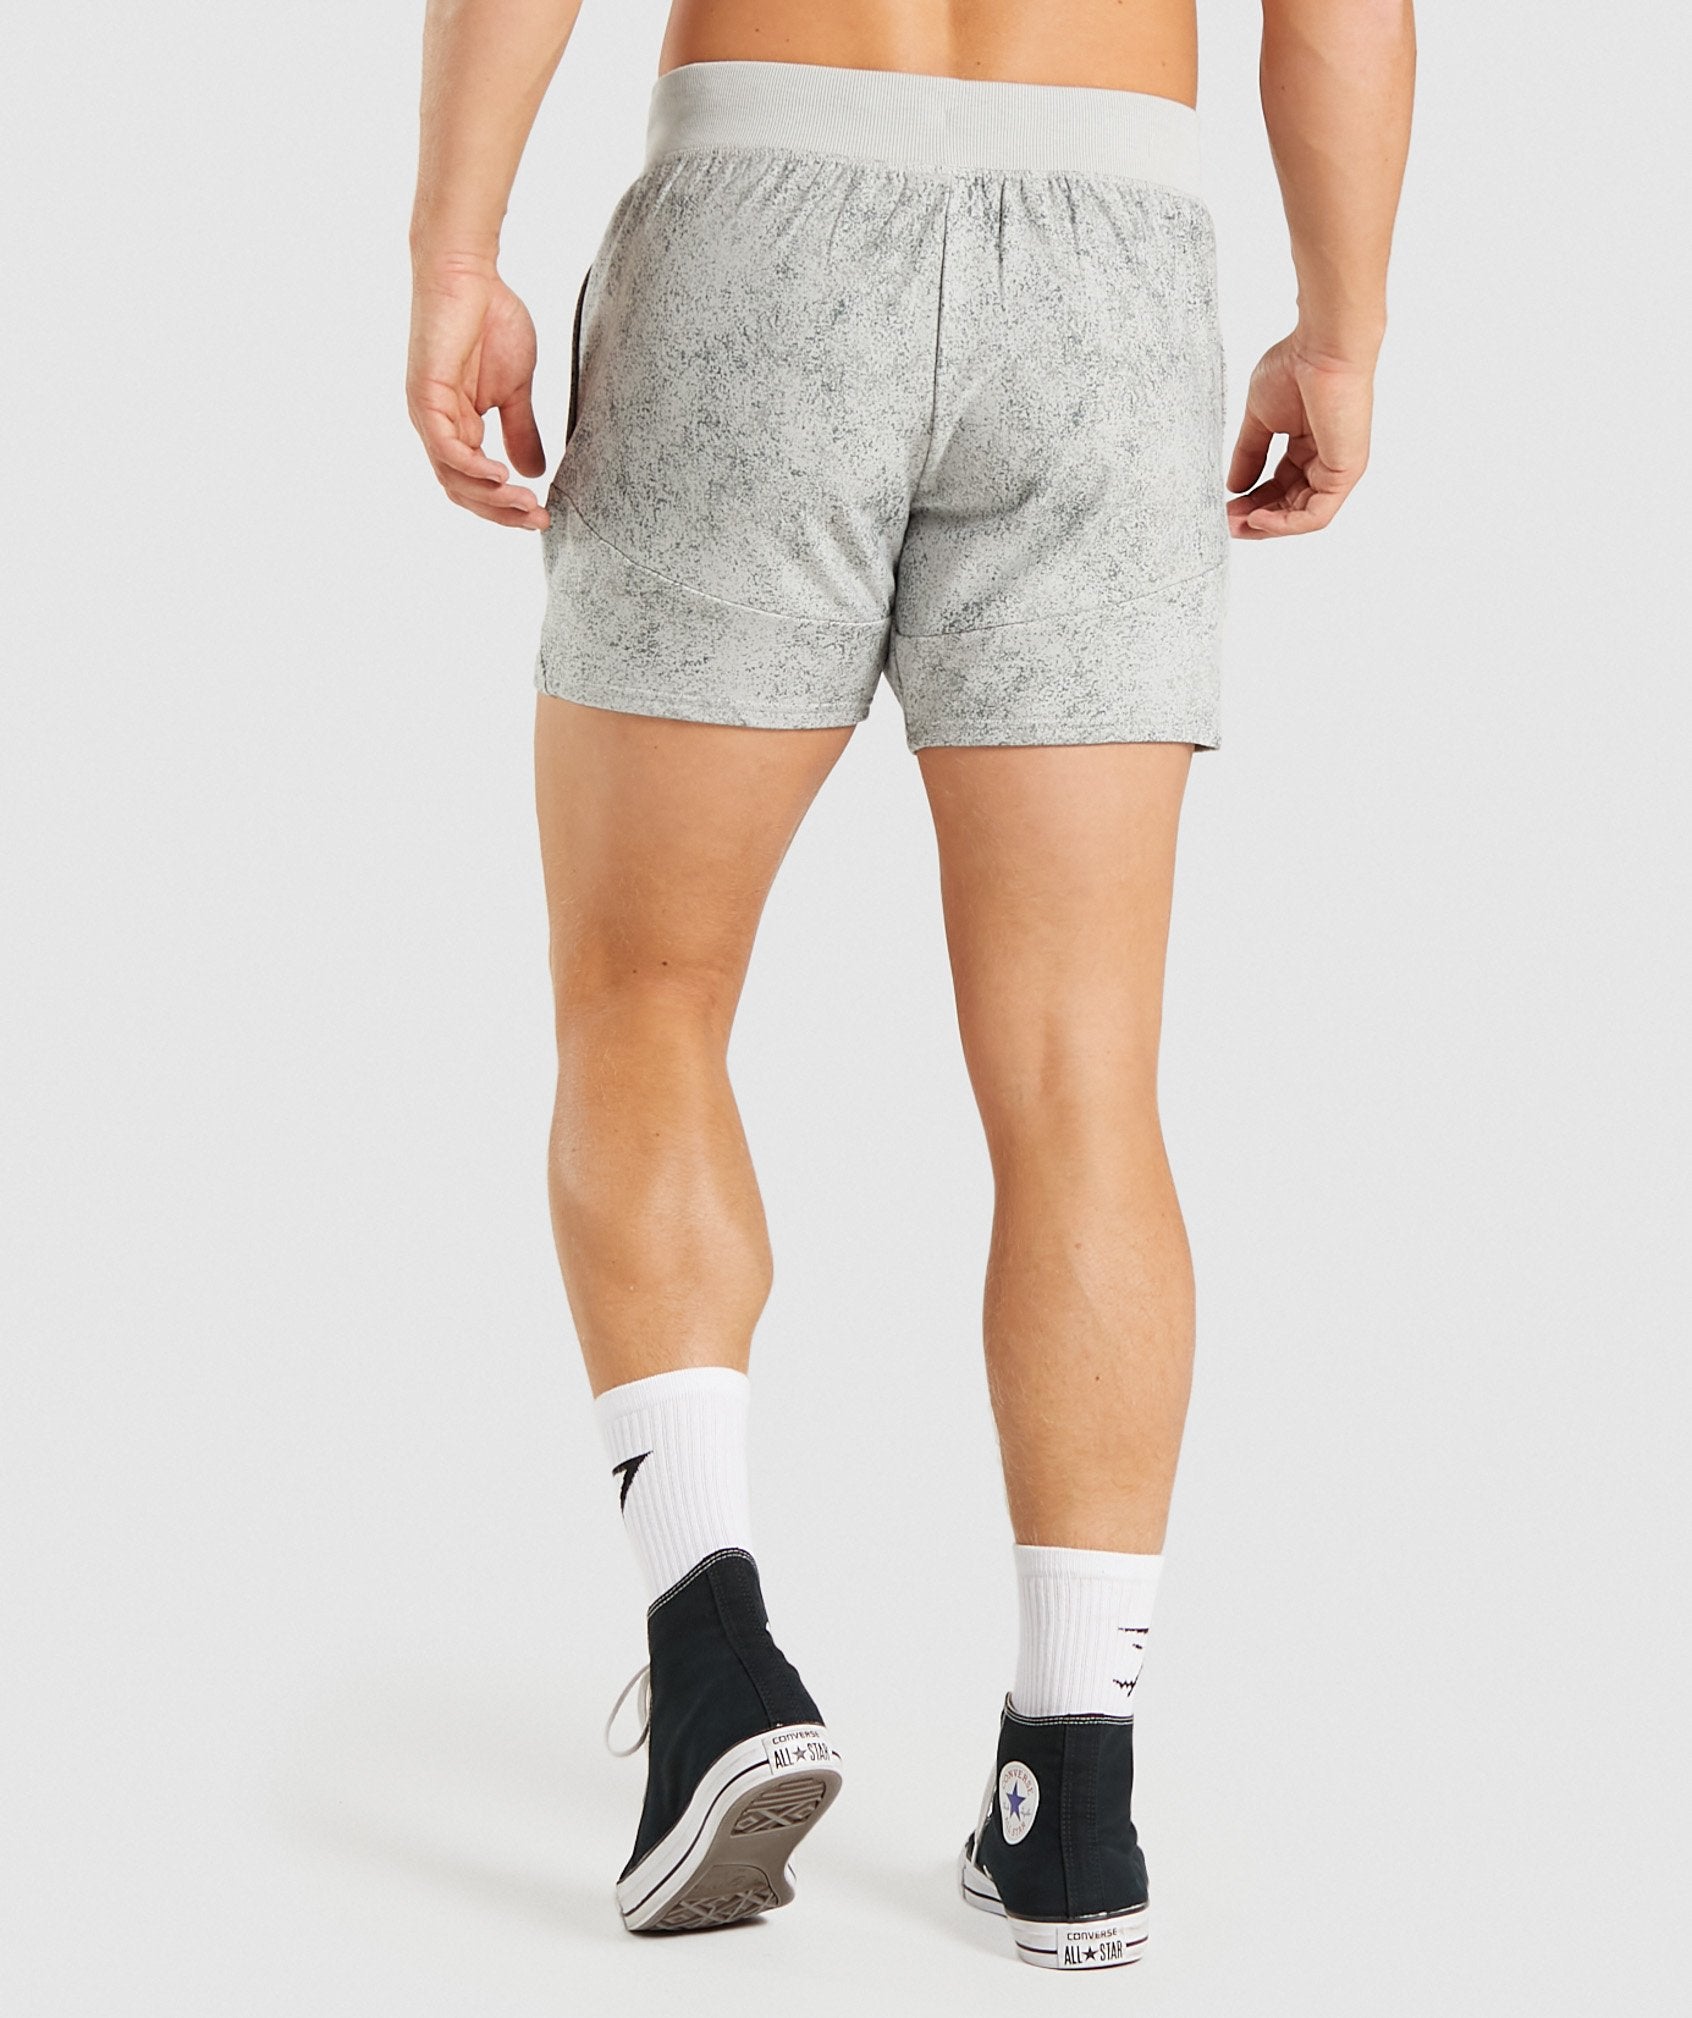 Chalk 5" Quad Shorts in Light Grey Print - view 3